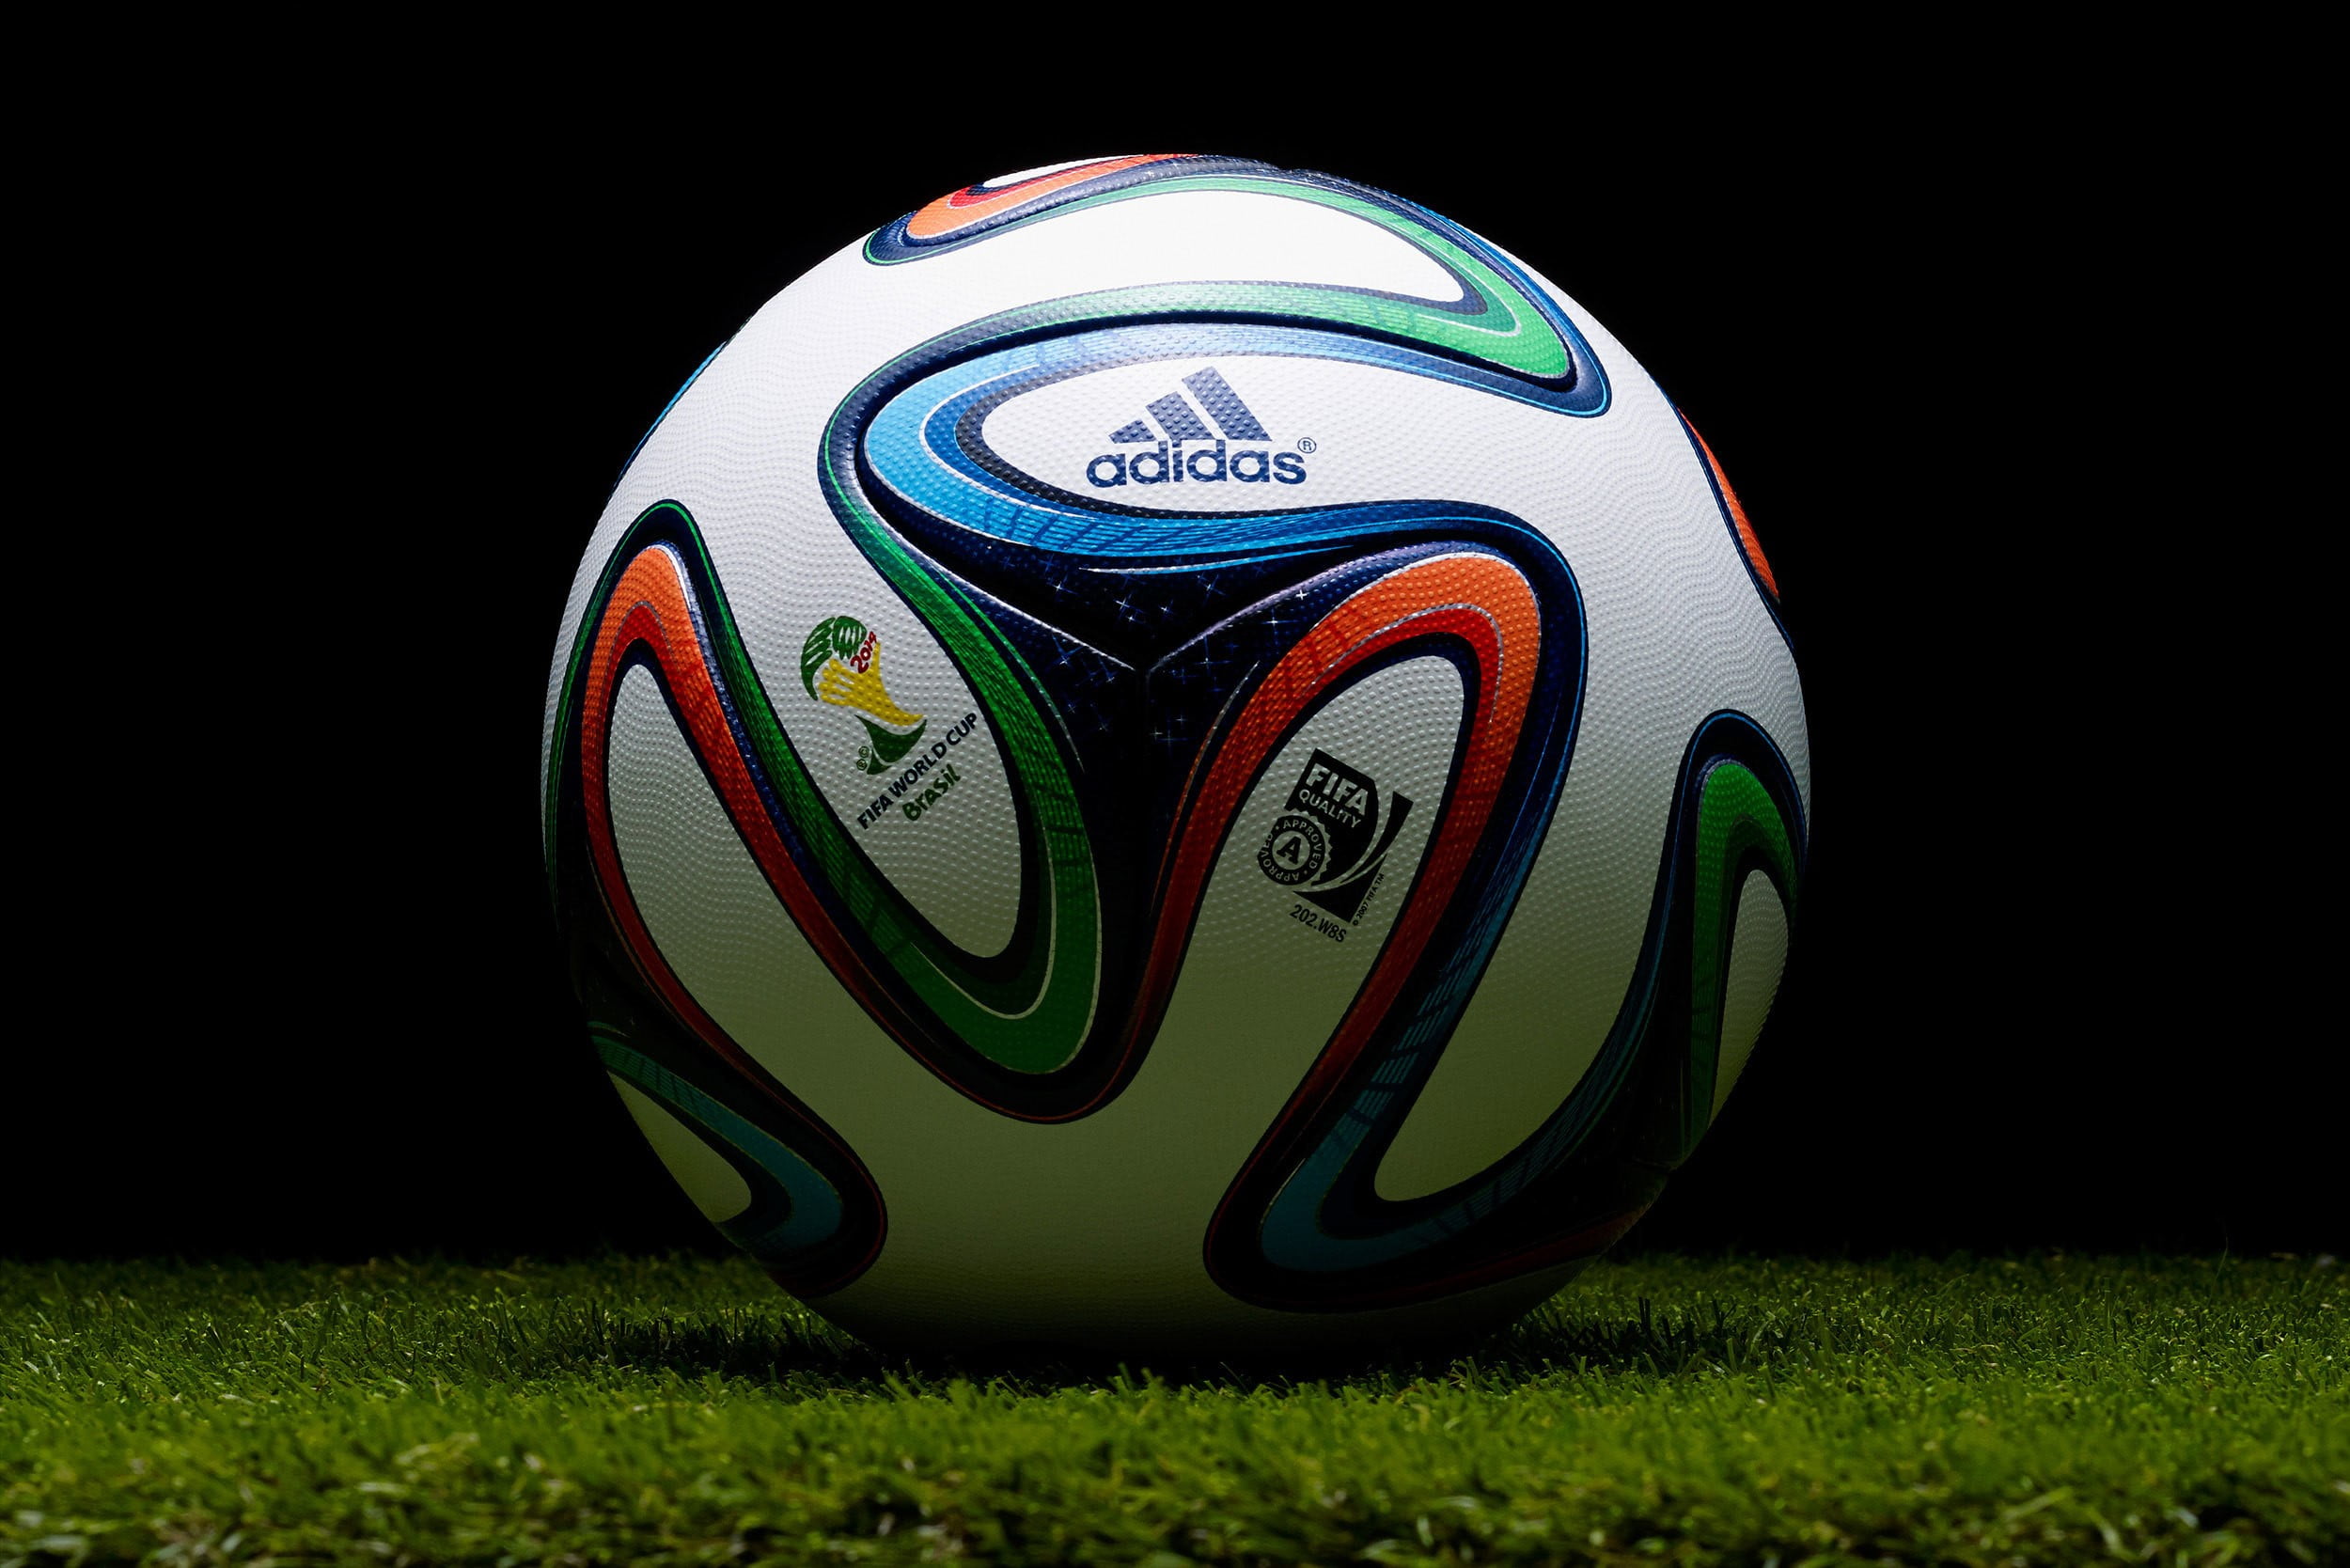 Brazuca, 2014, World cup, Adidas, Ball, Football, black background